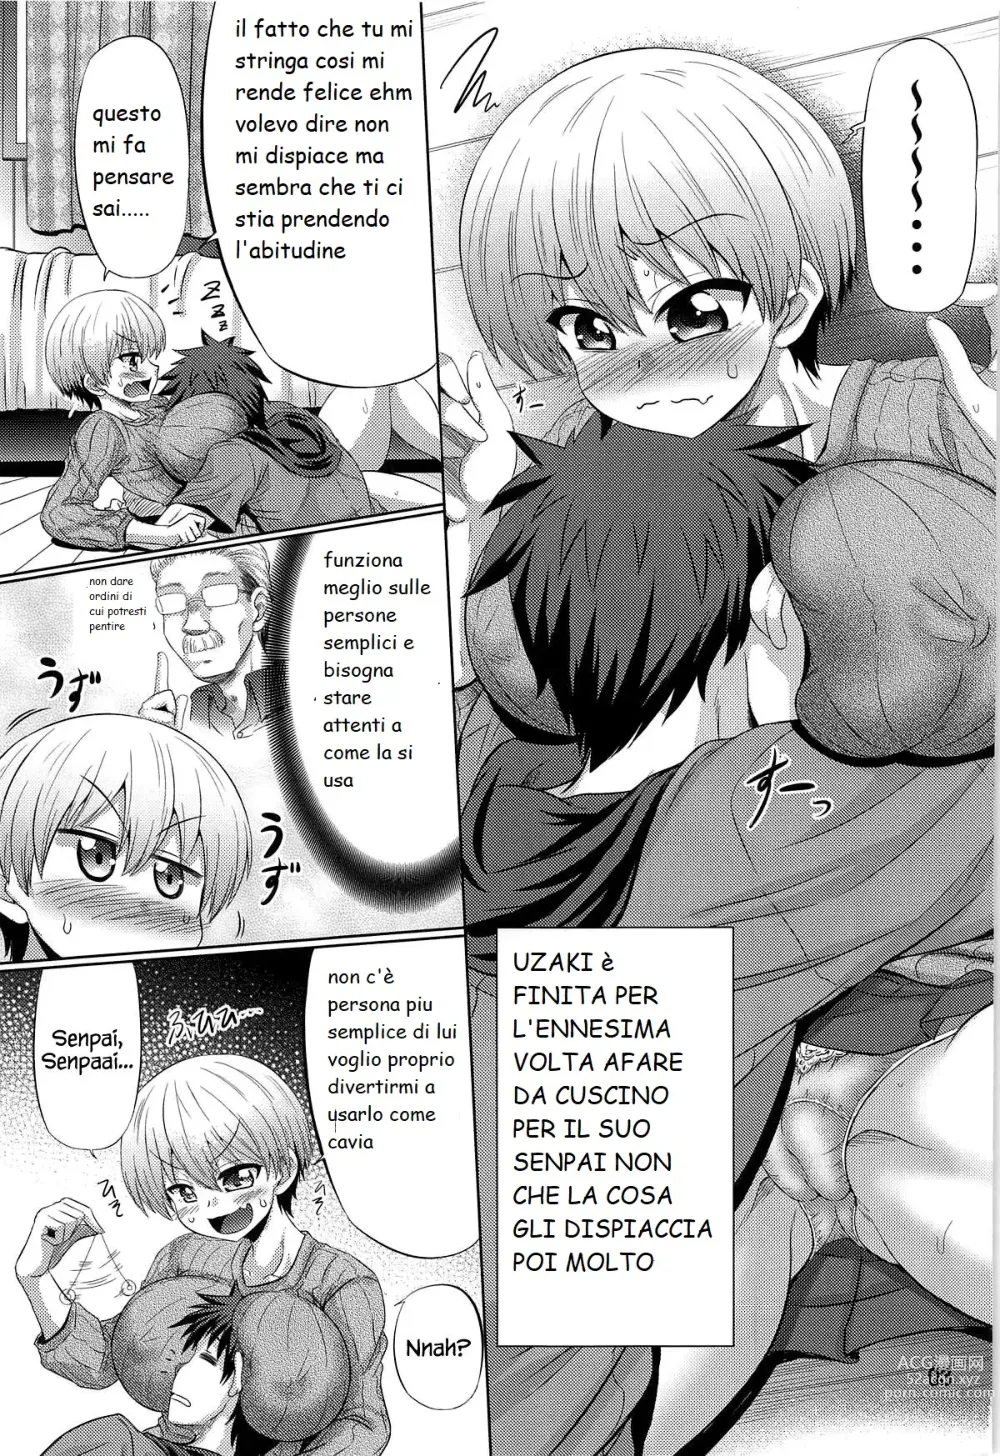 Page 1 of doujinshi uzaki vuole fare yn regalo speciale